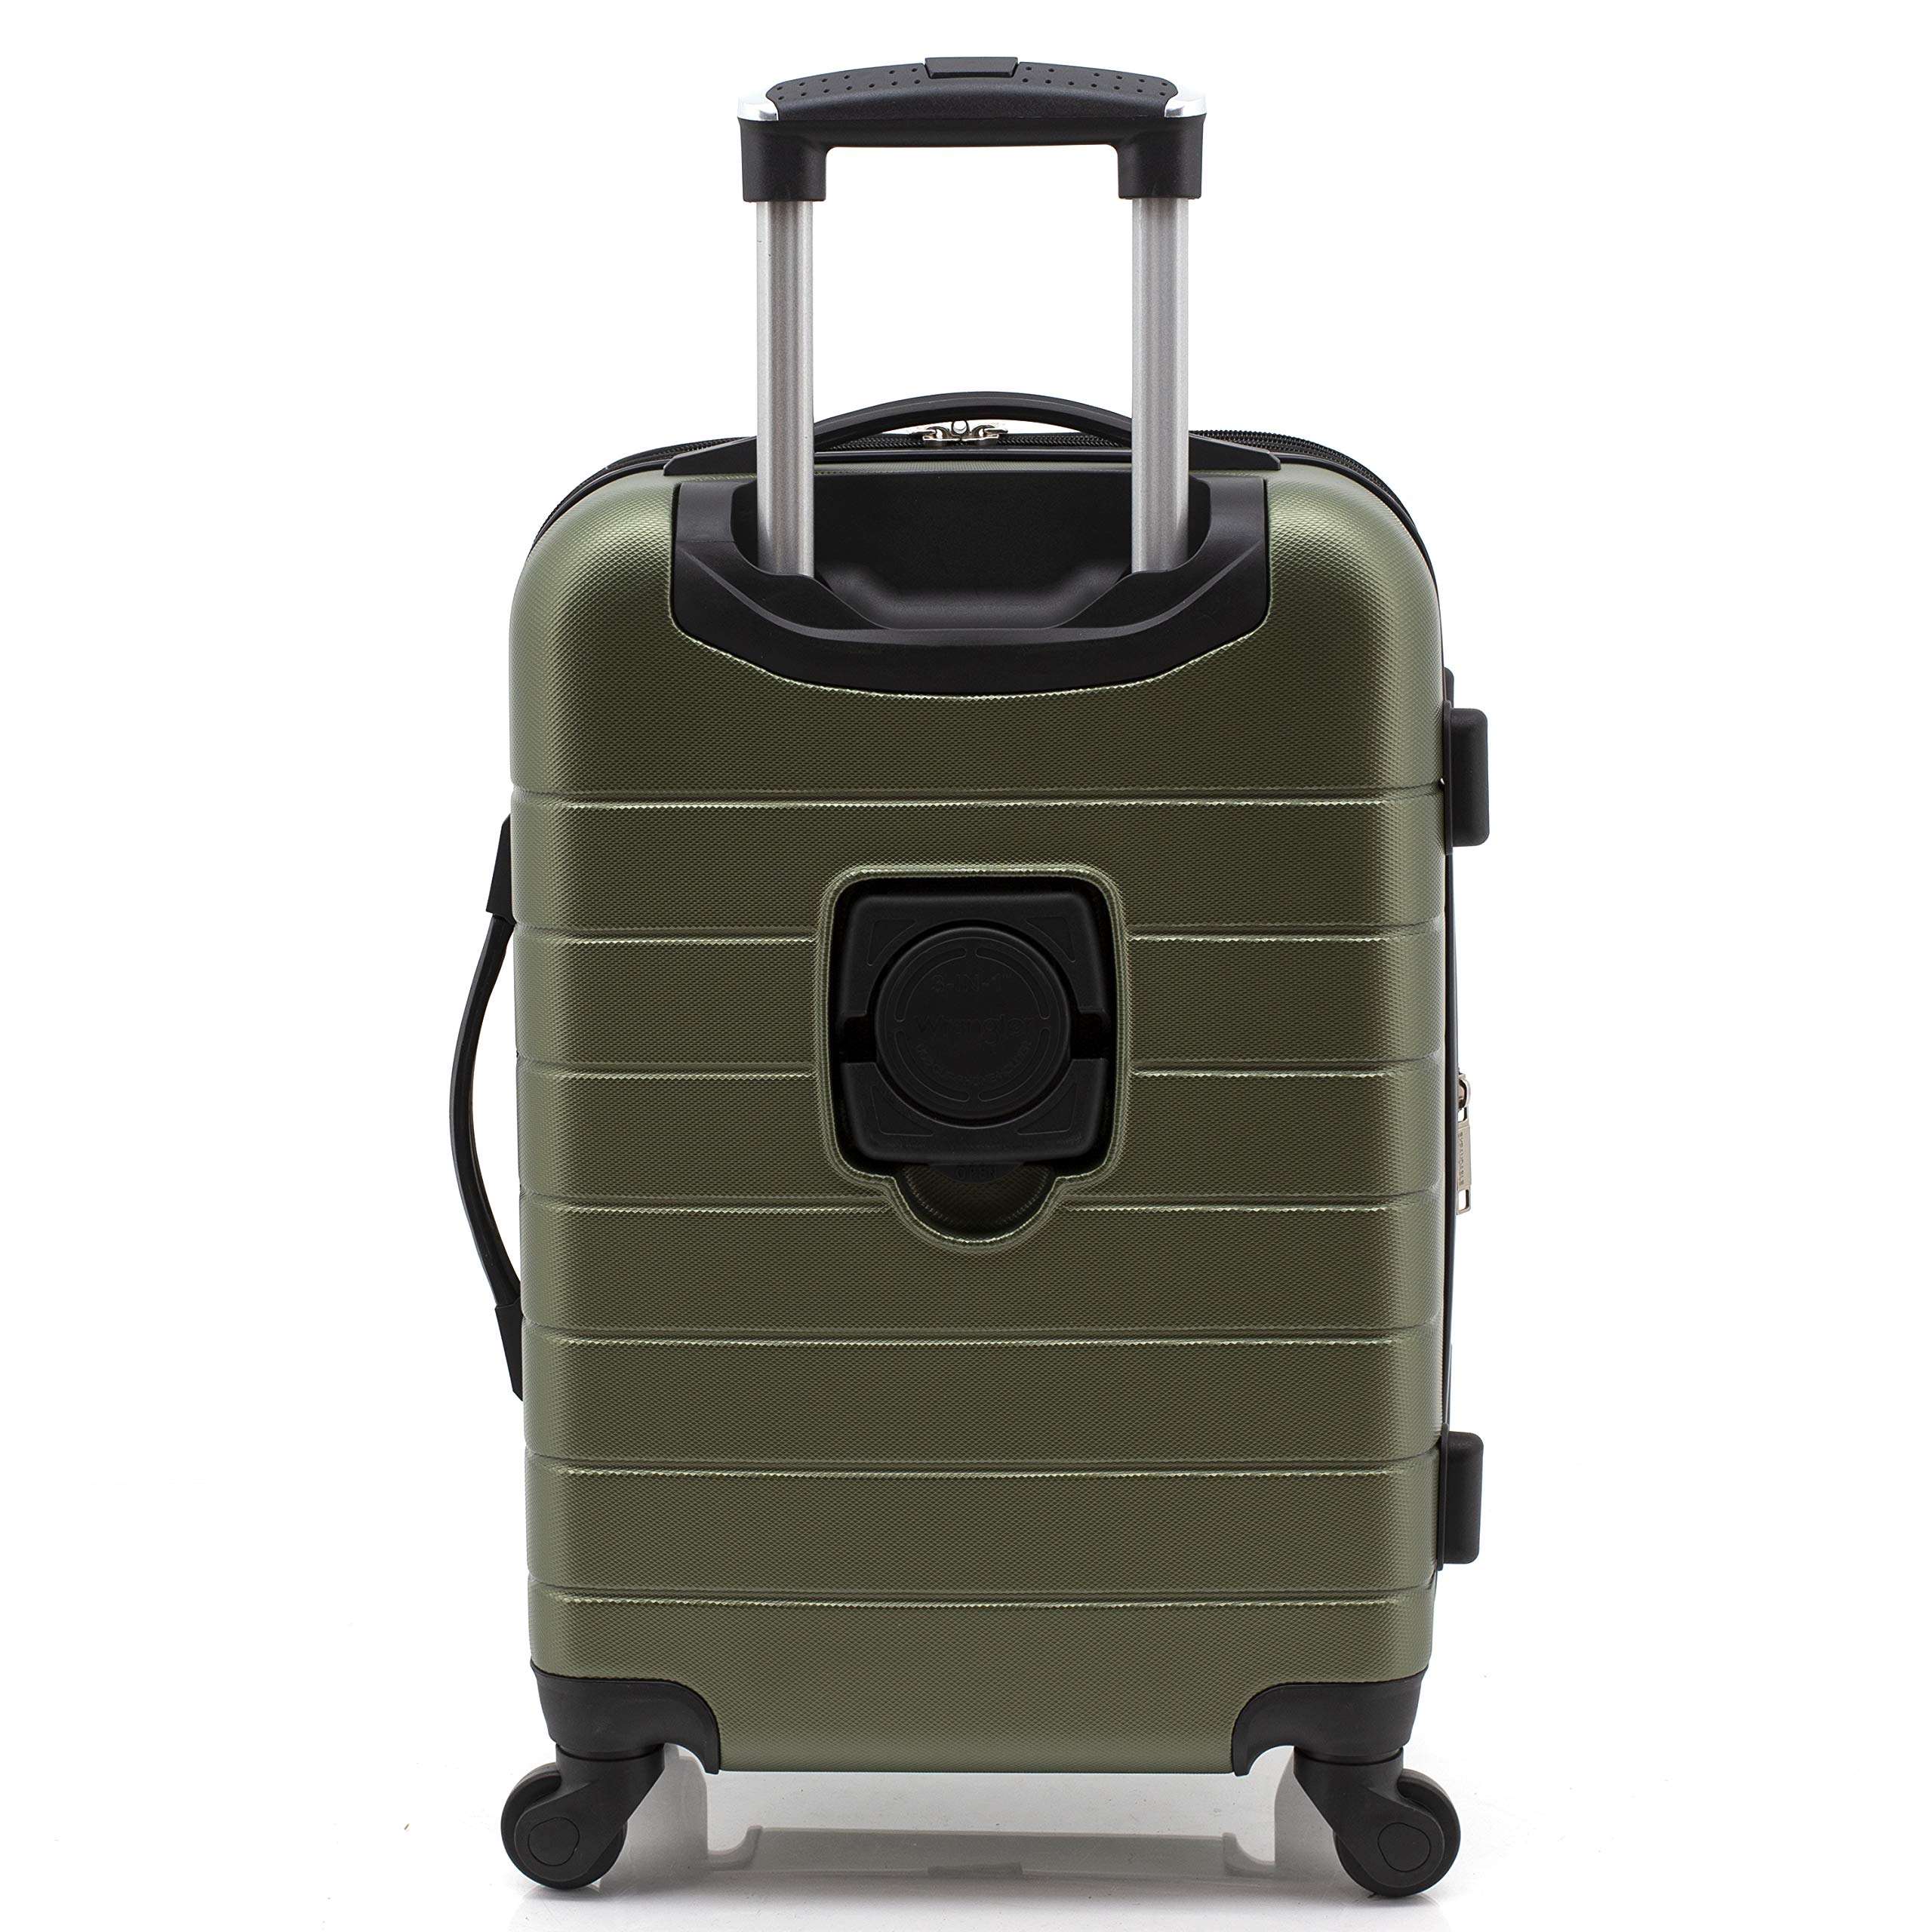 Mua Wrangler Smart Luggage Set with Cup Holder and USB Port, Olive Green, 3  Piece trên Amazon Mỹ chính hãng 2023 | Giaonhan247